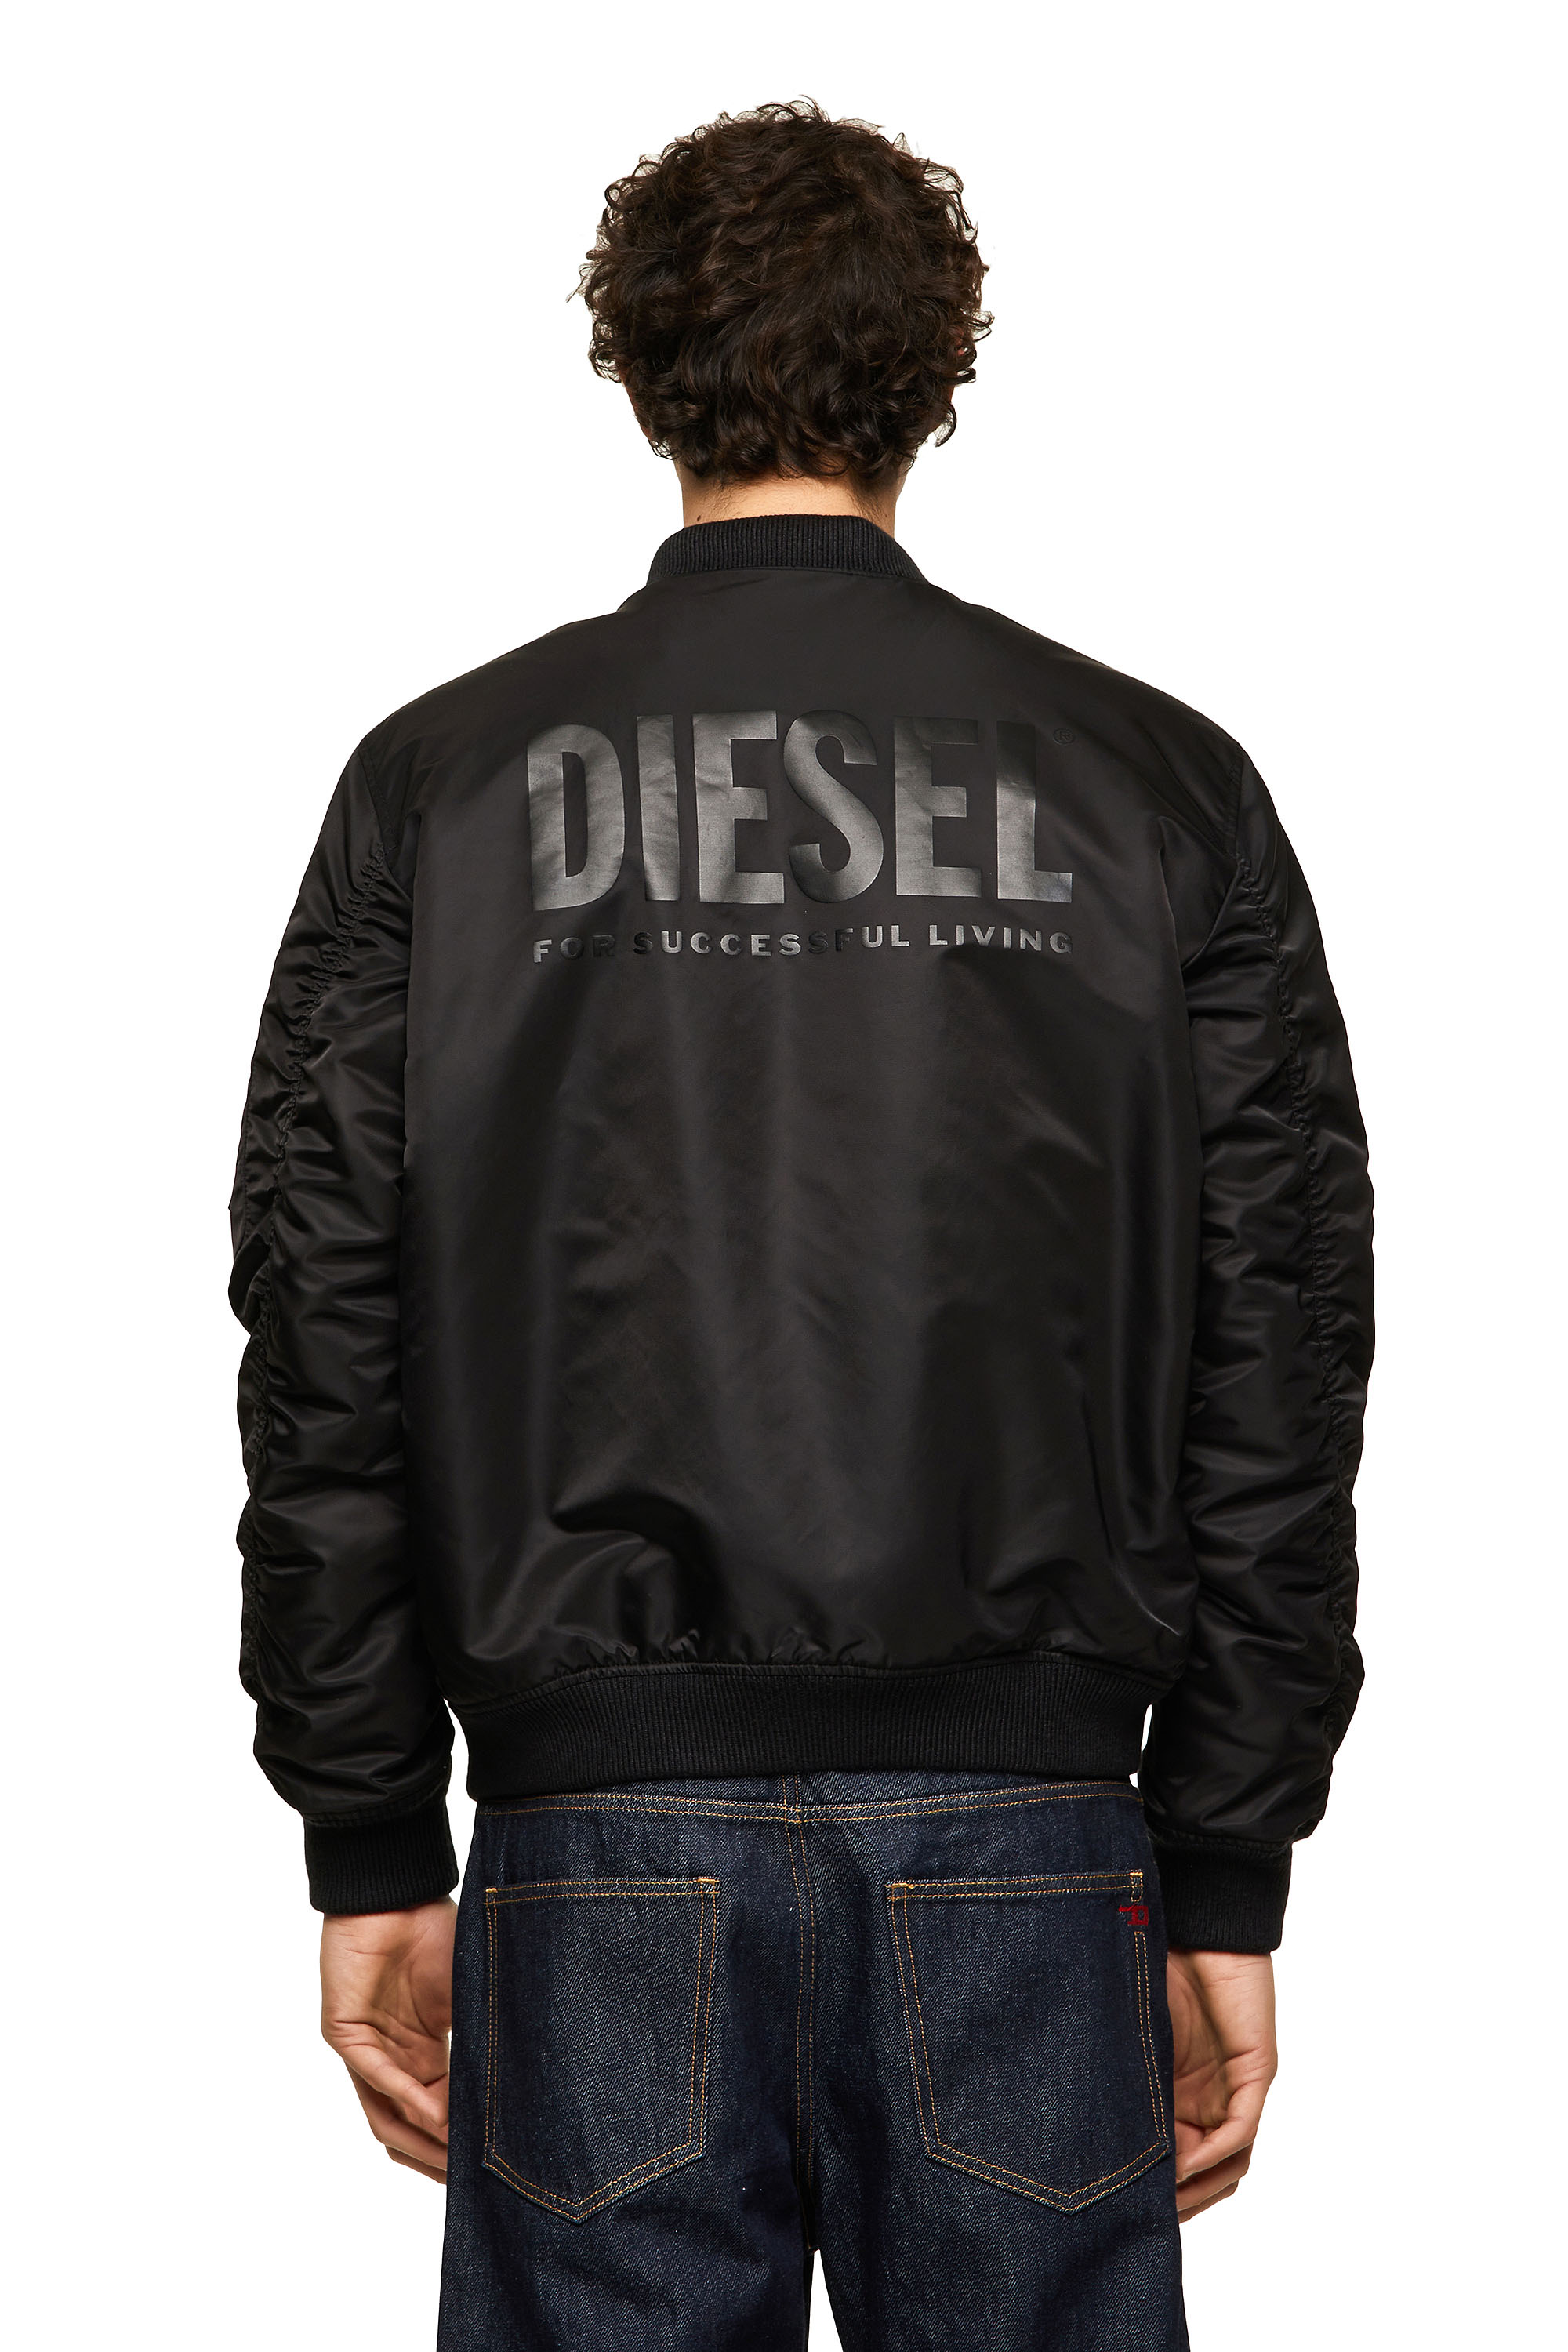 Diesel - J-ROSS-REV-A, Black - Image 2